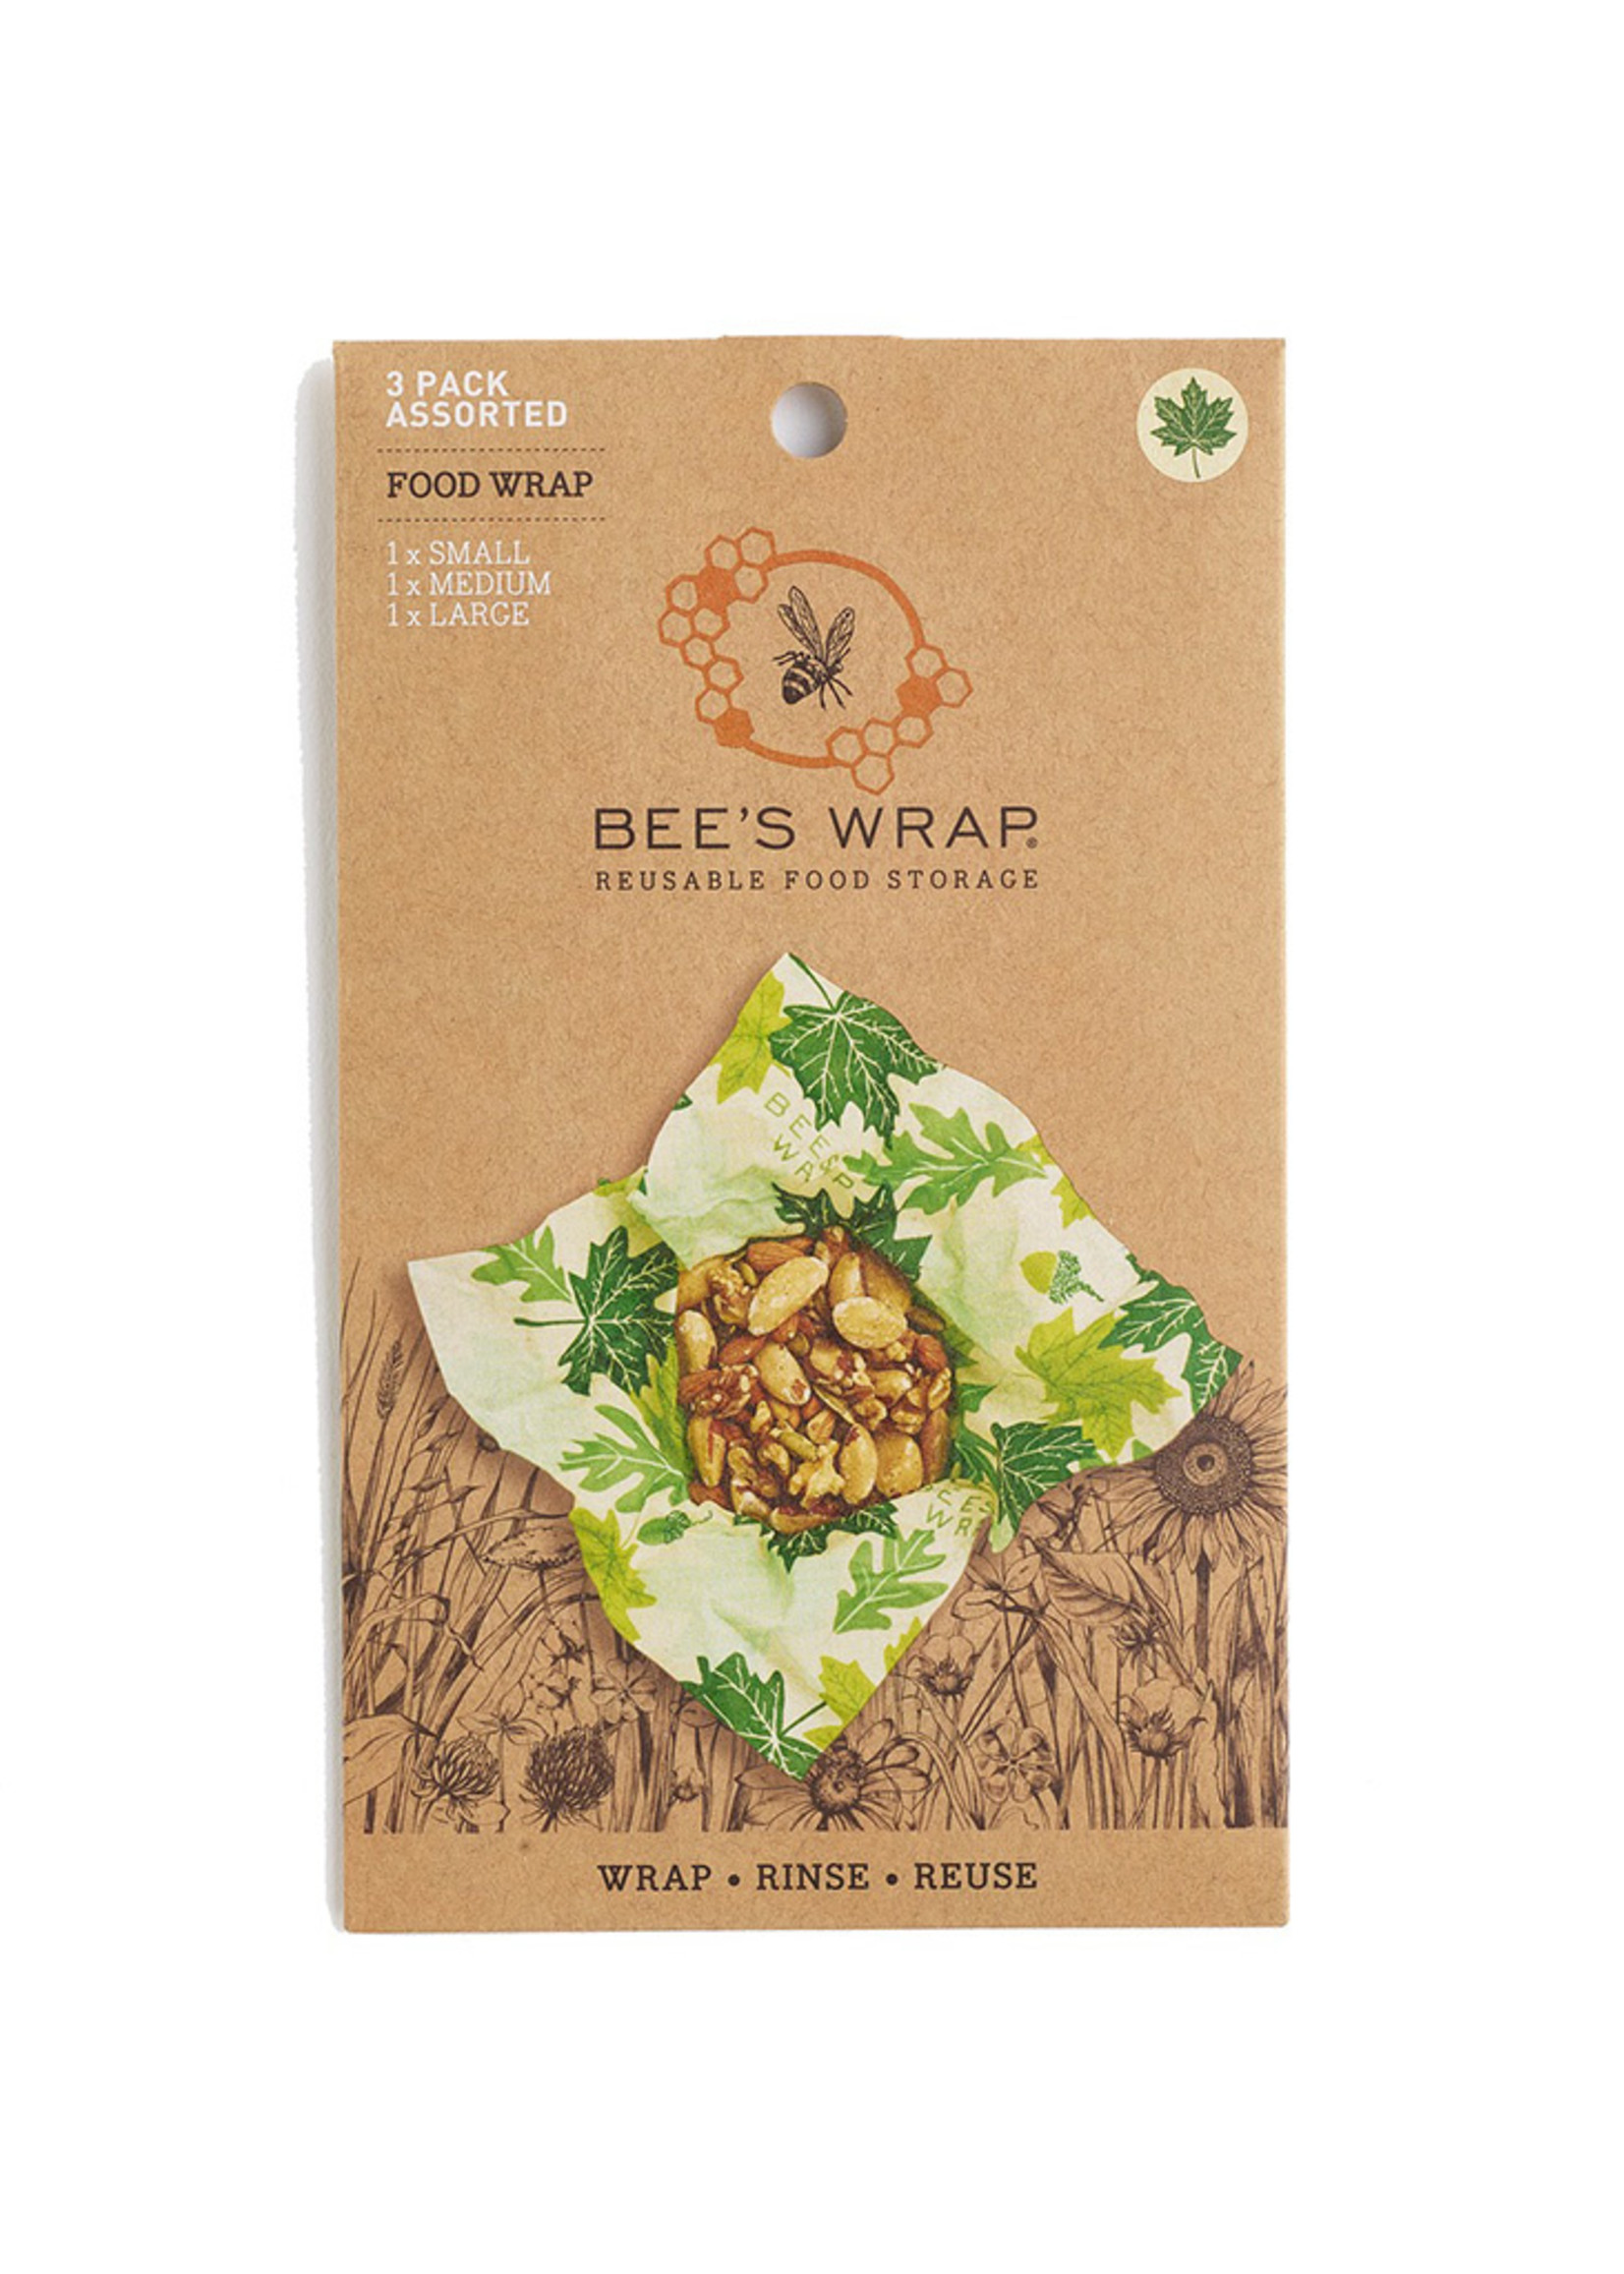 Bee's Wrap Forest Floor Food Wrap Set of 3